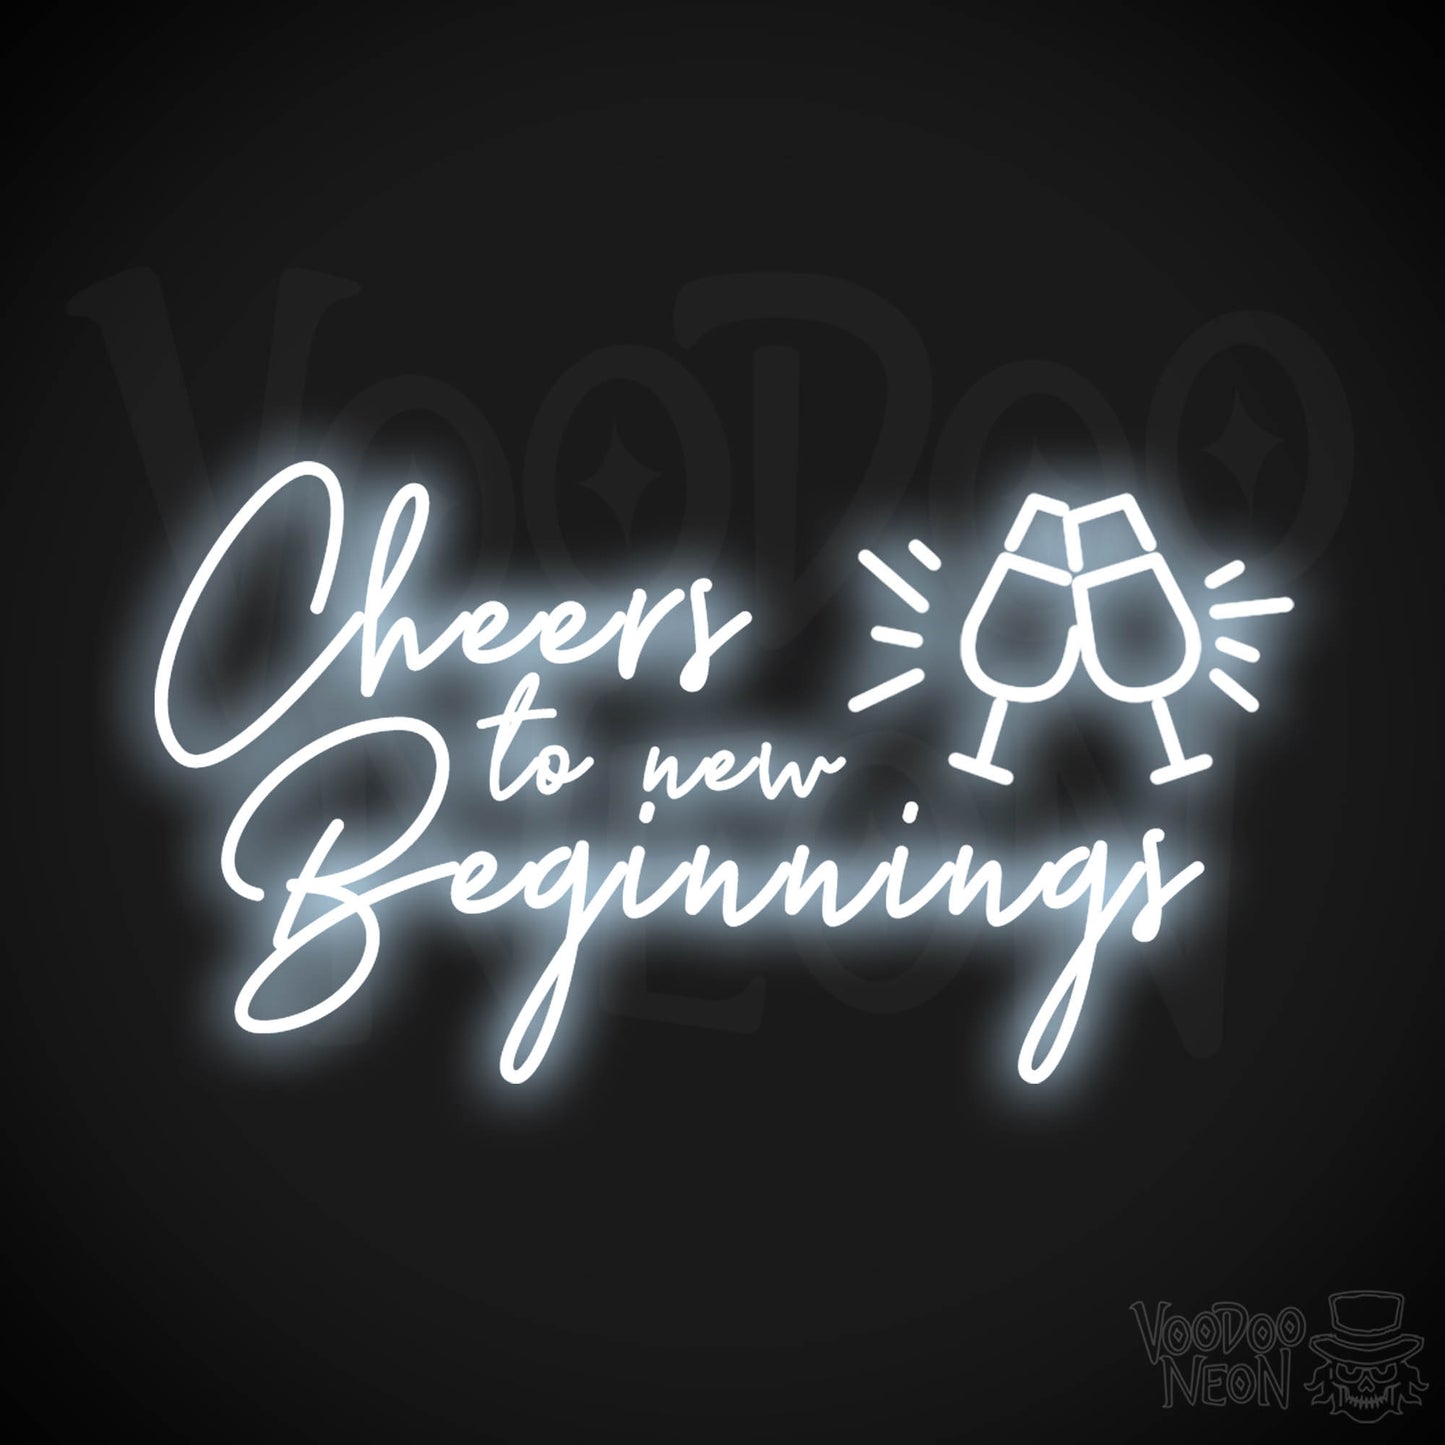 Cheers To New Beginnings Neon Sign - Neon Cheers To New Beginnings Sign - Color Cool White